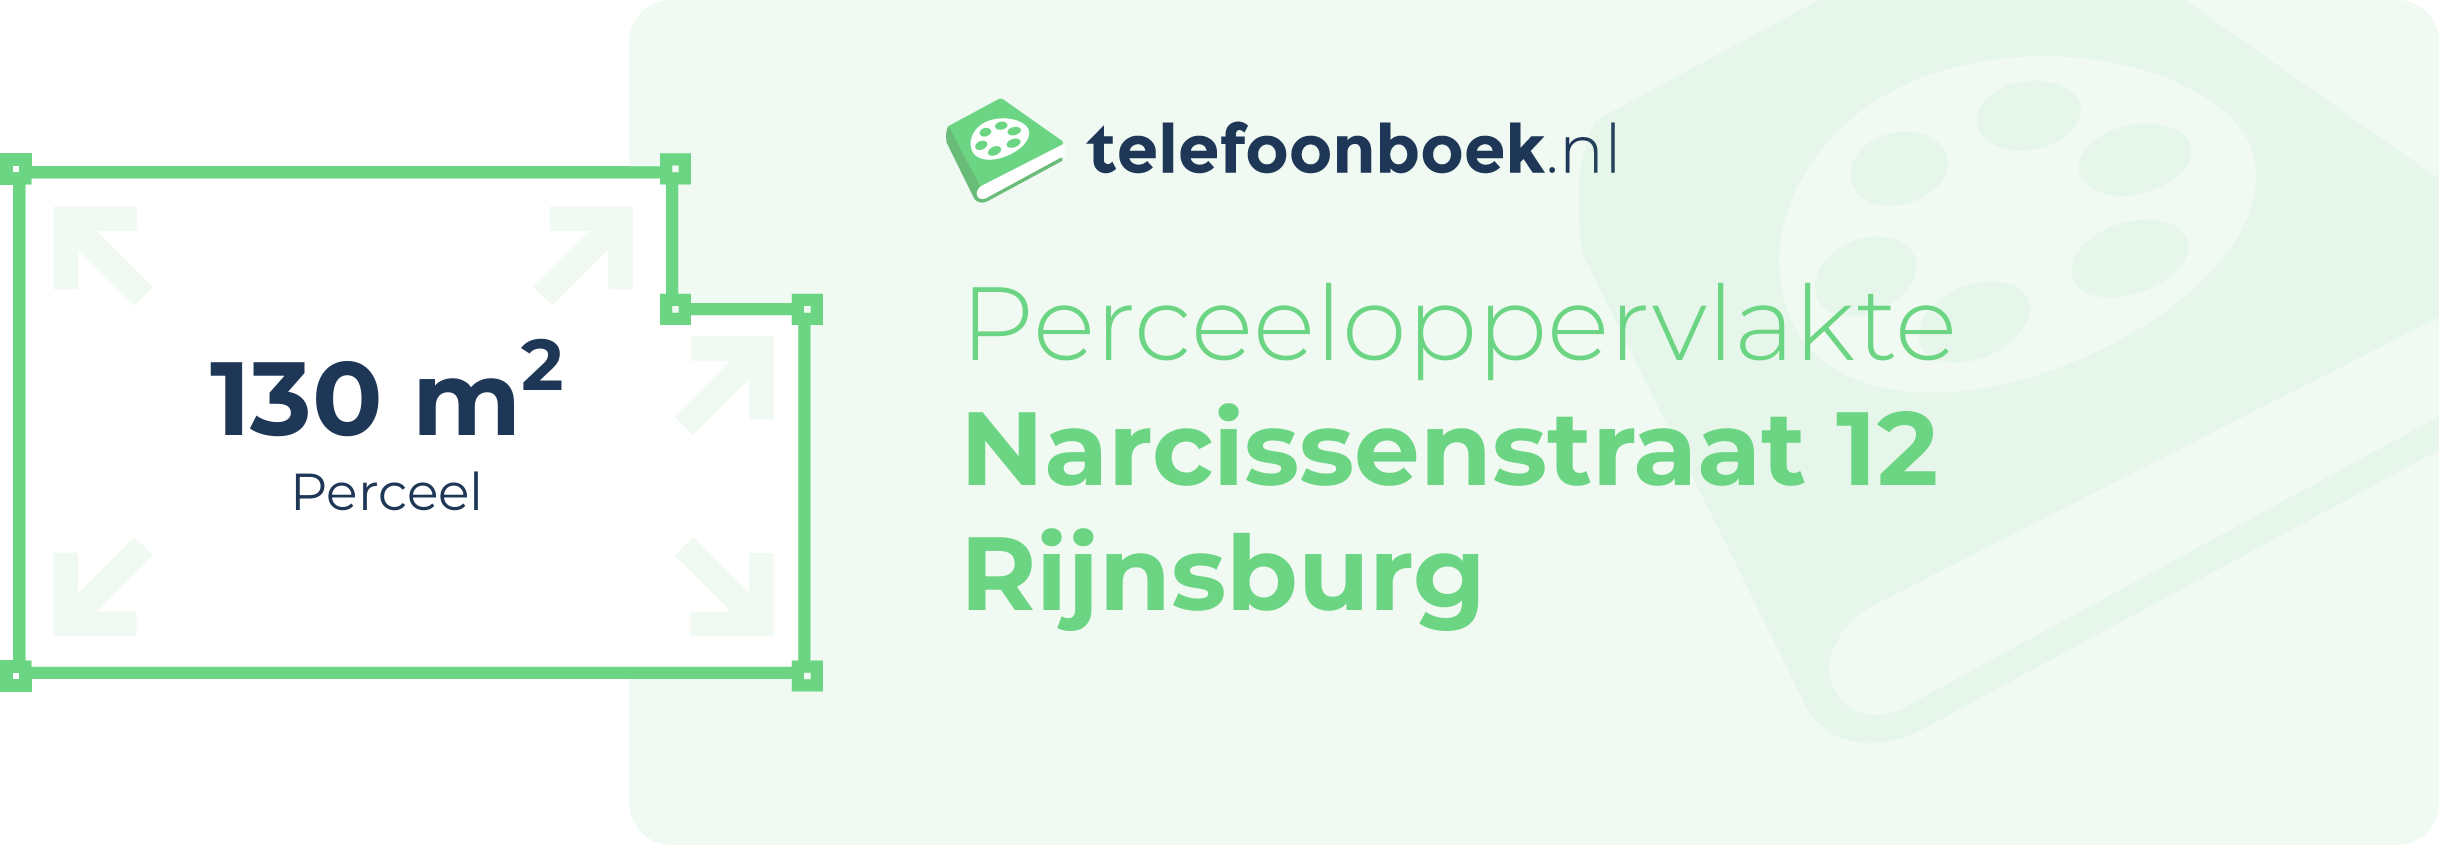 Perceeloppervlakte Narcissenstraat 12 Rijnsburg